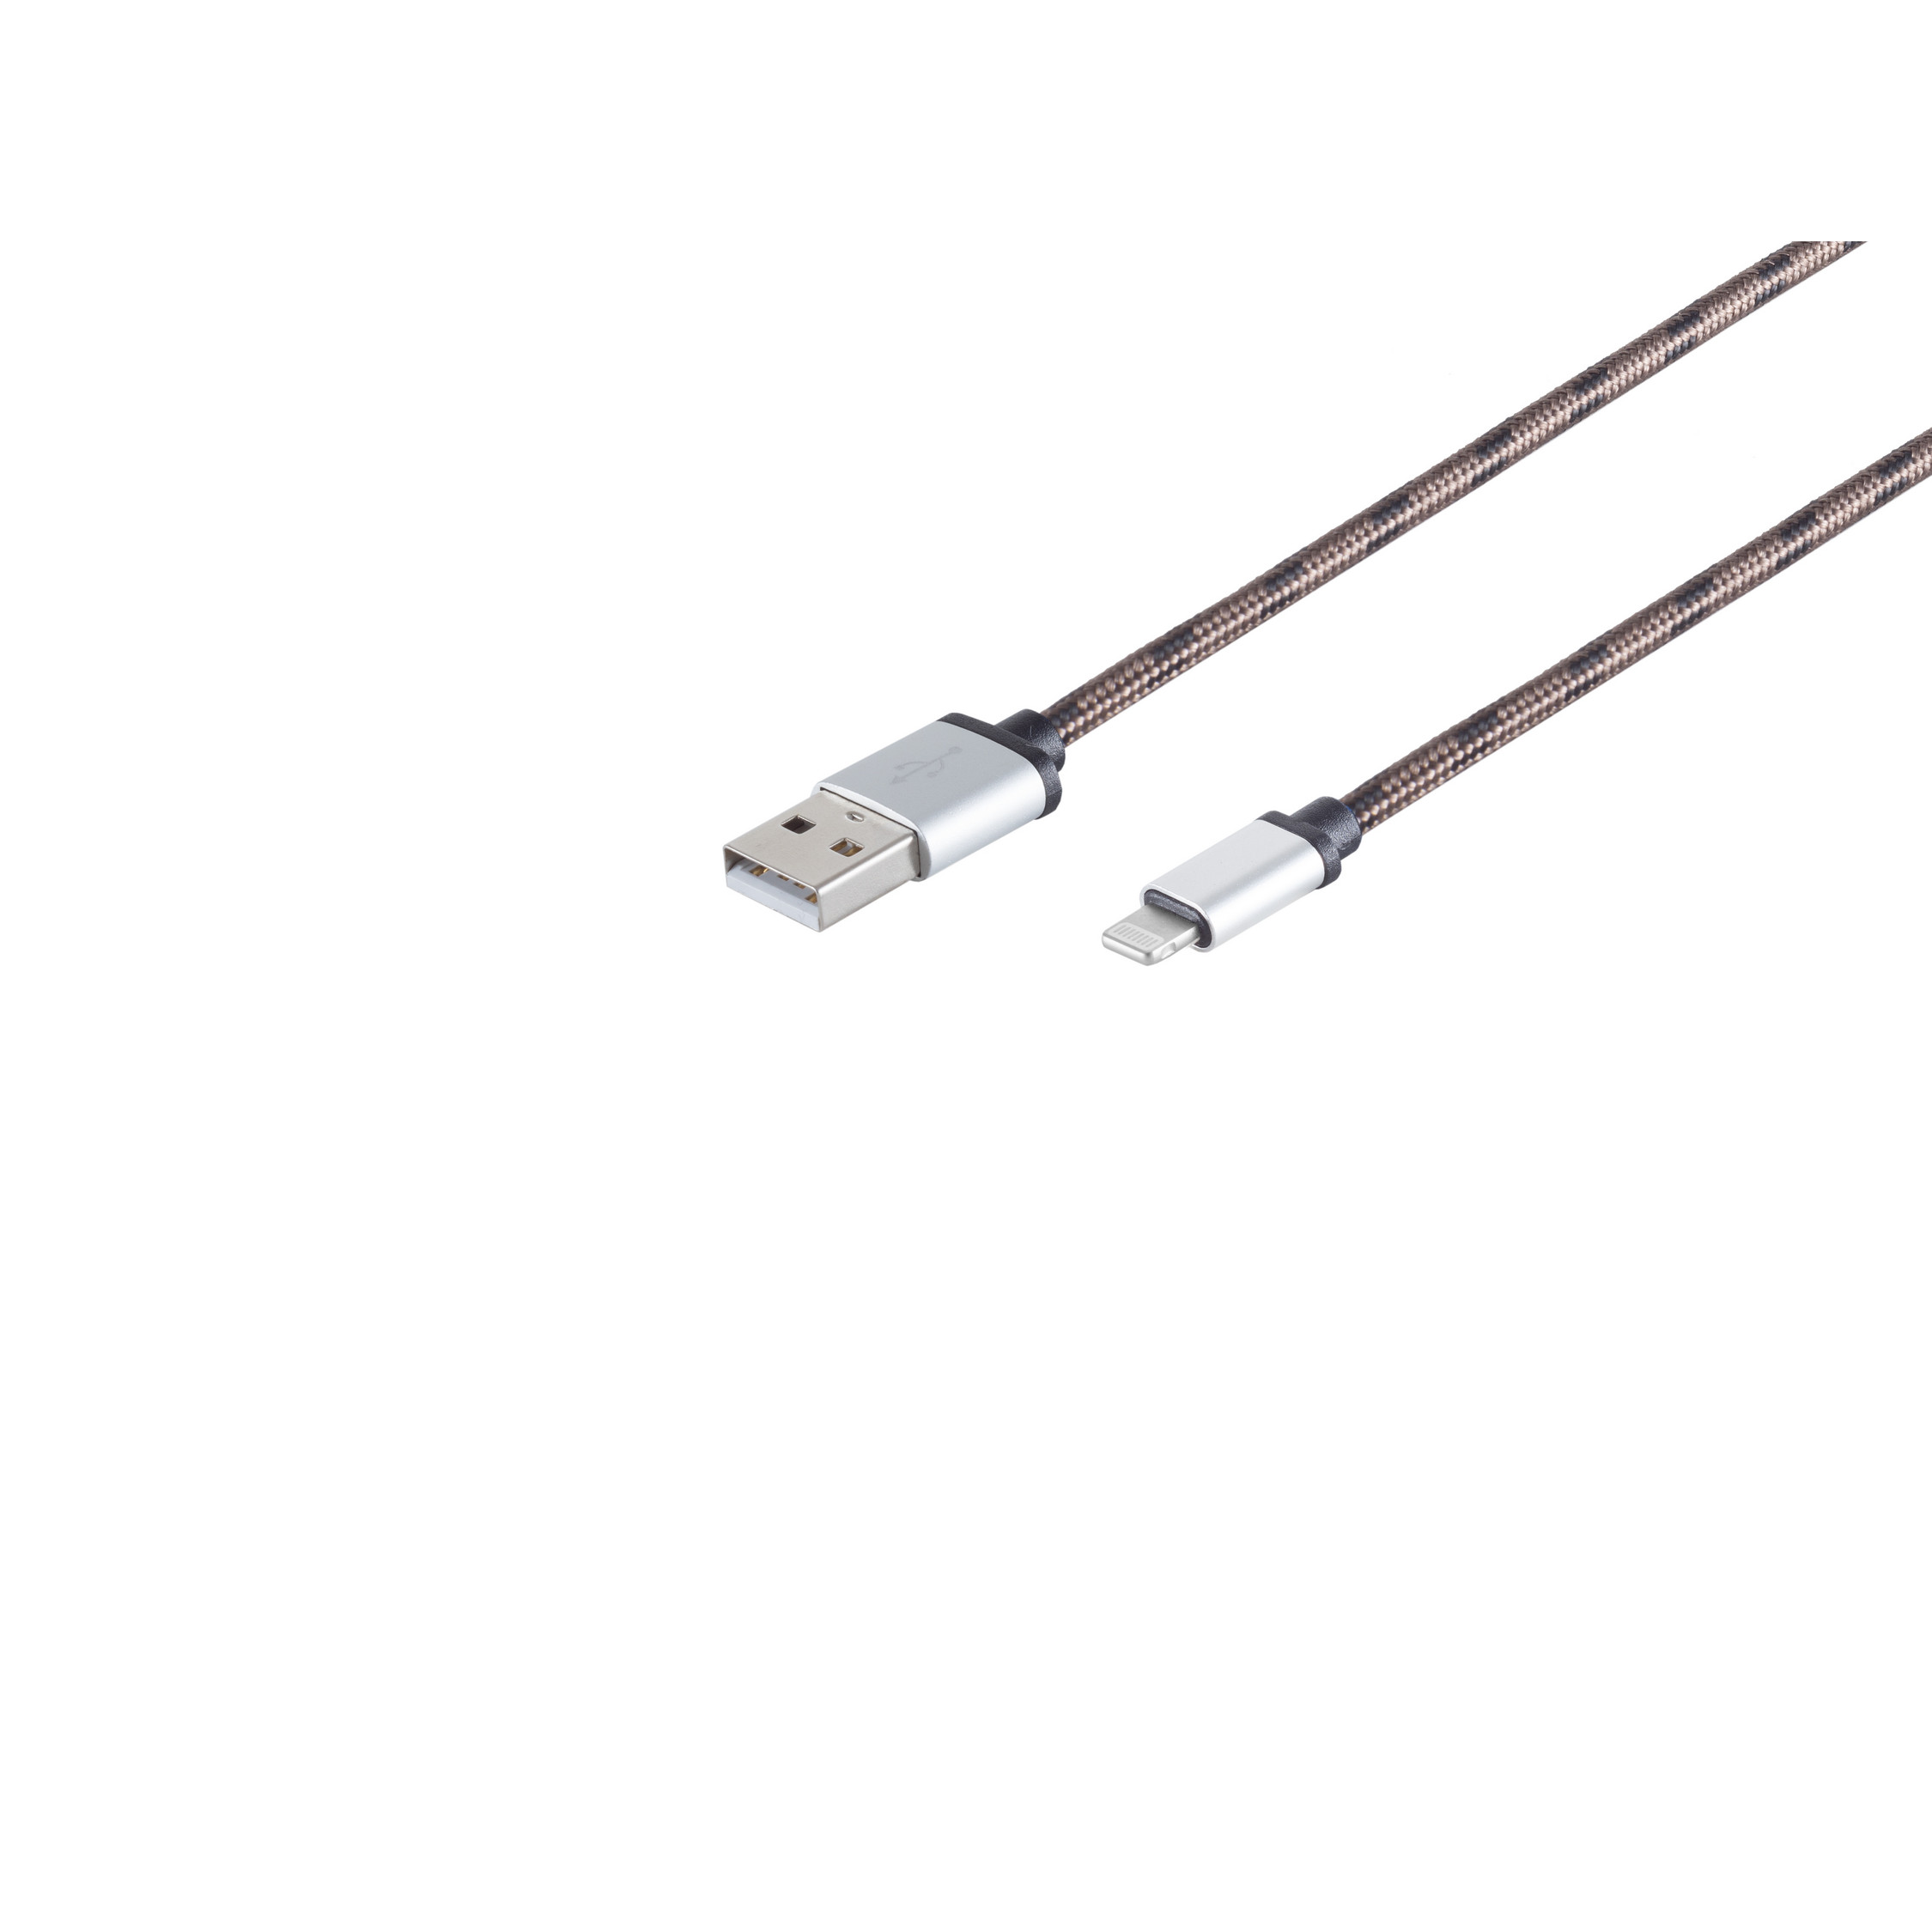 S/CONN MAXIMUM CONNECTIVITY USB-Ladekabel USB 8-pin braun A Stecker Stecker auf Kabel 2m